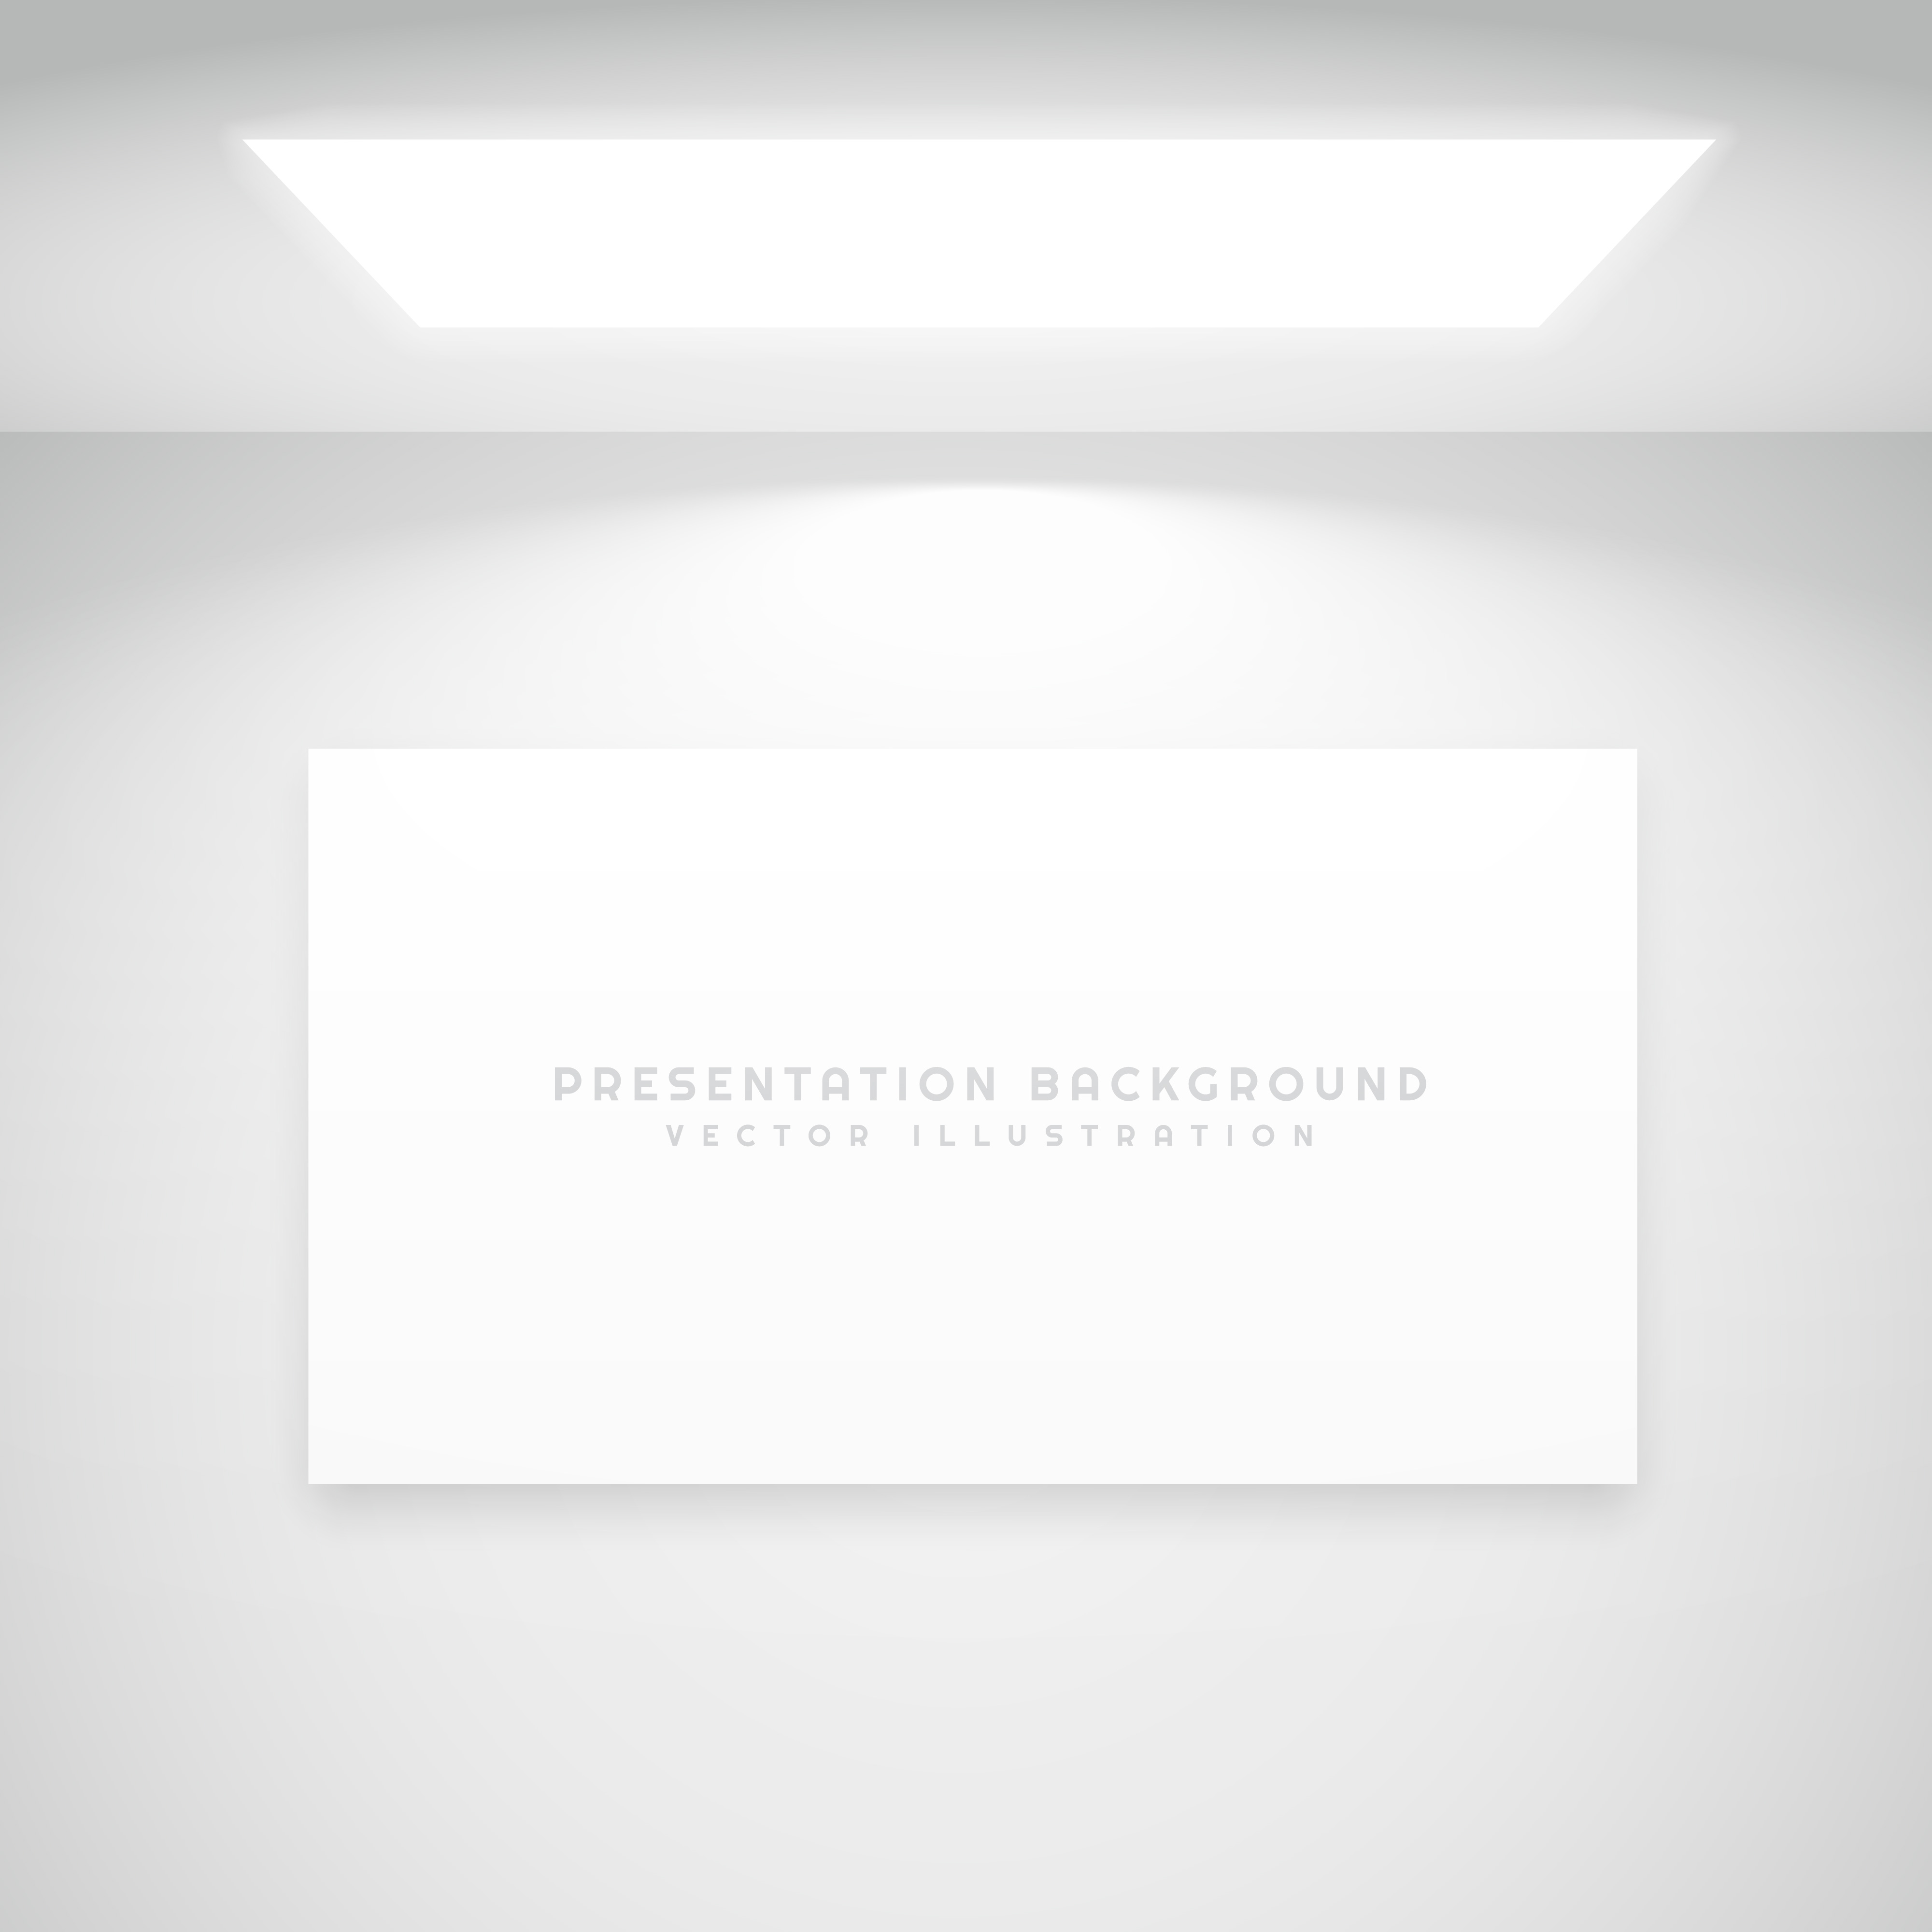 white background of presentation